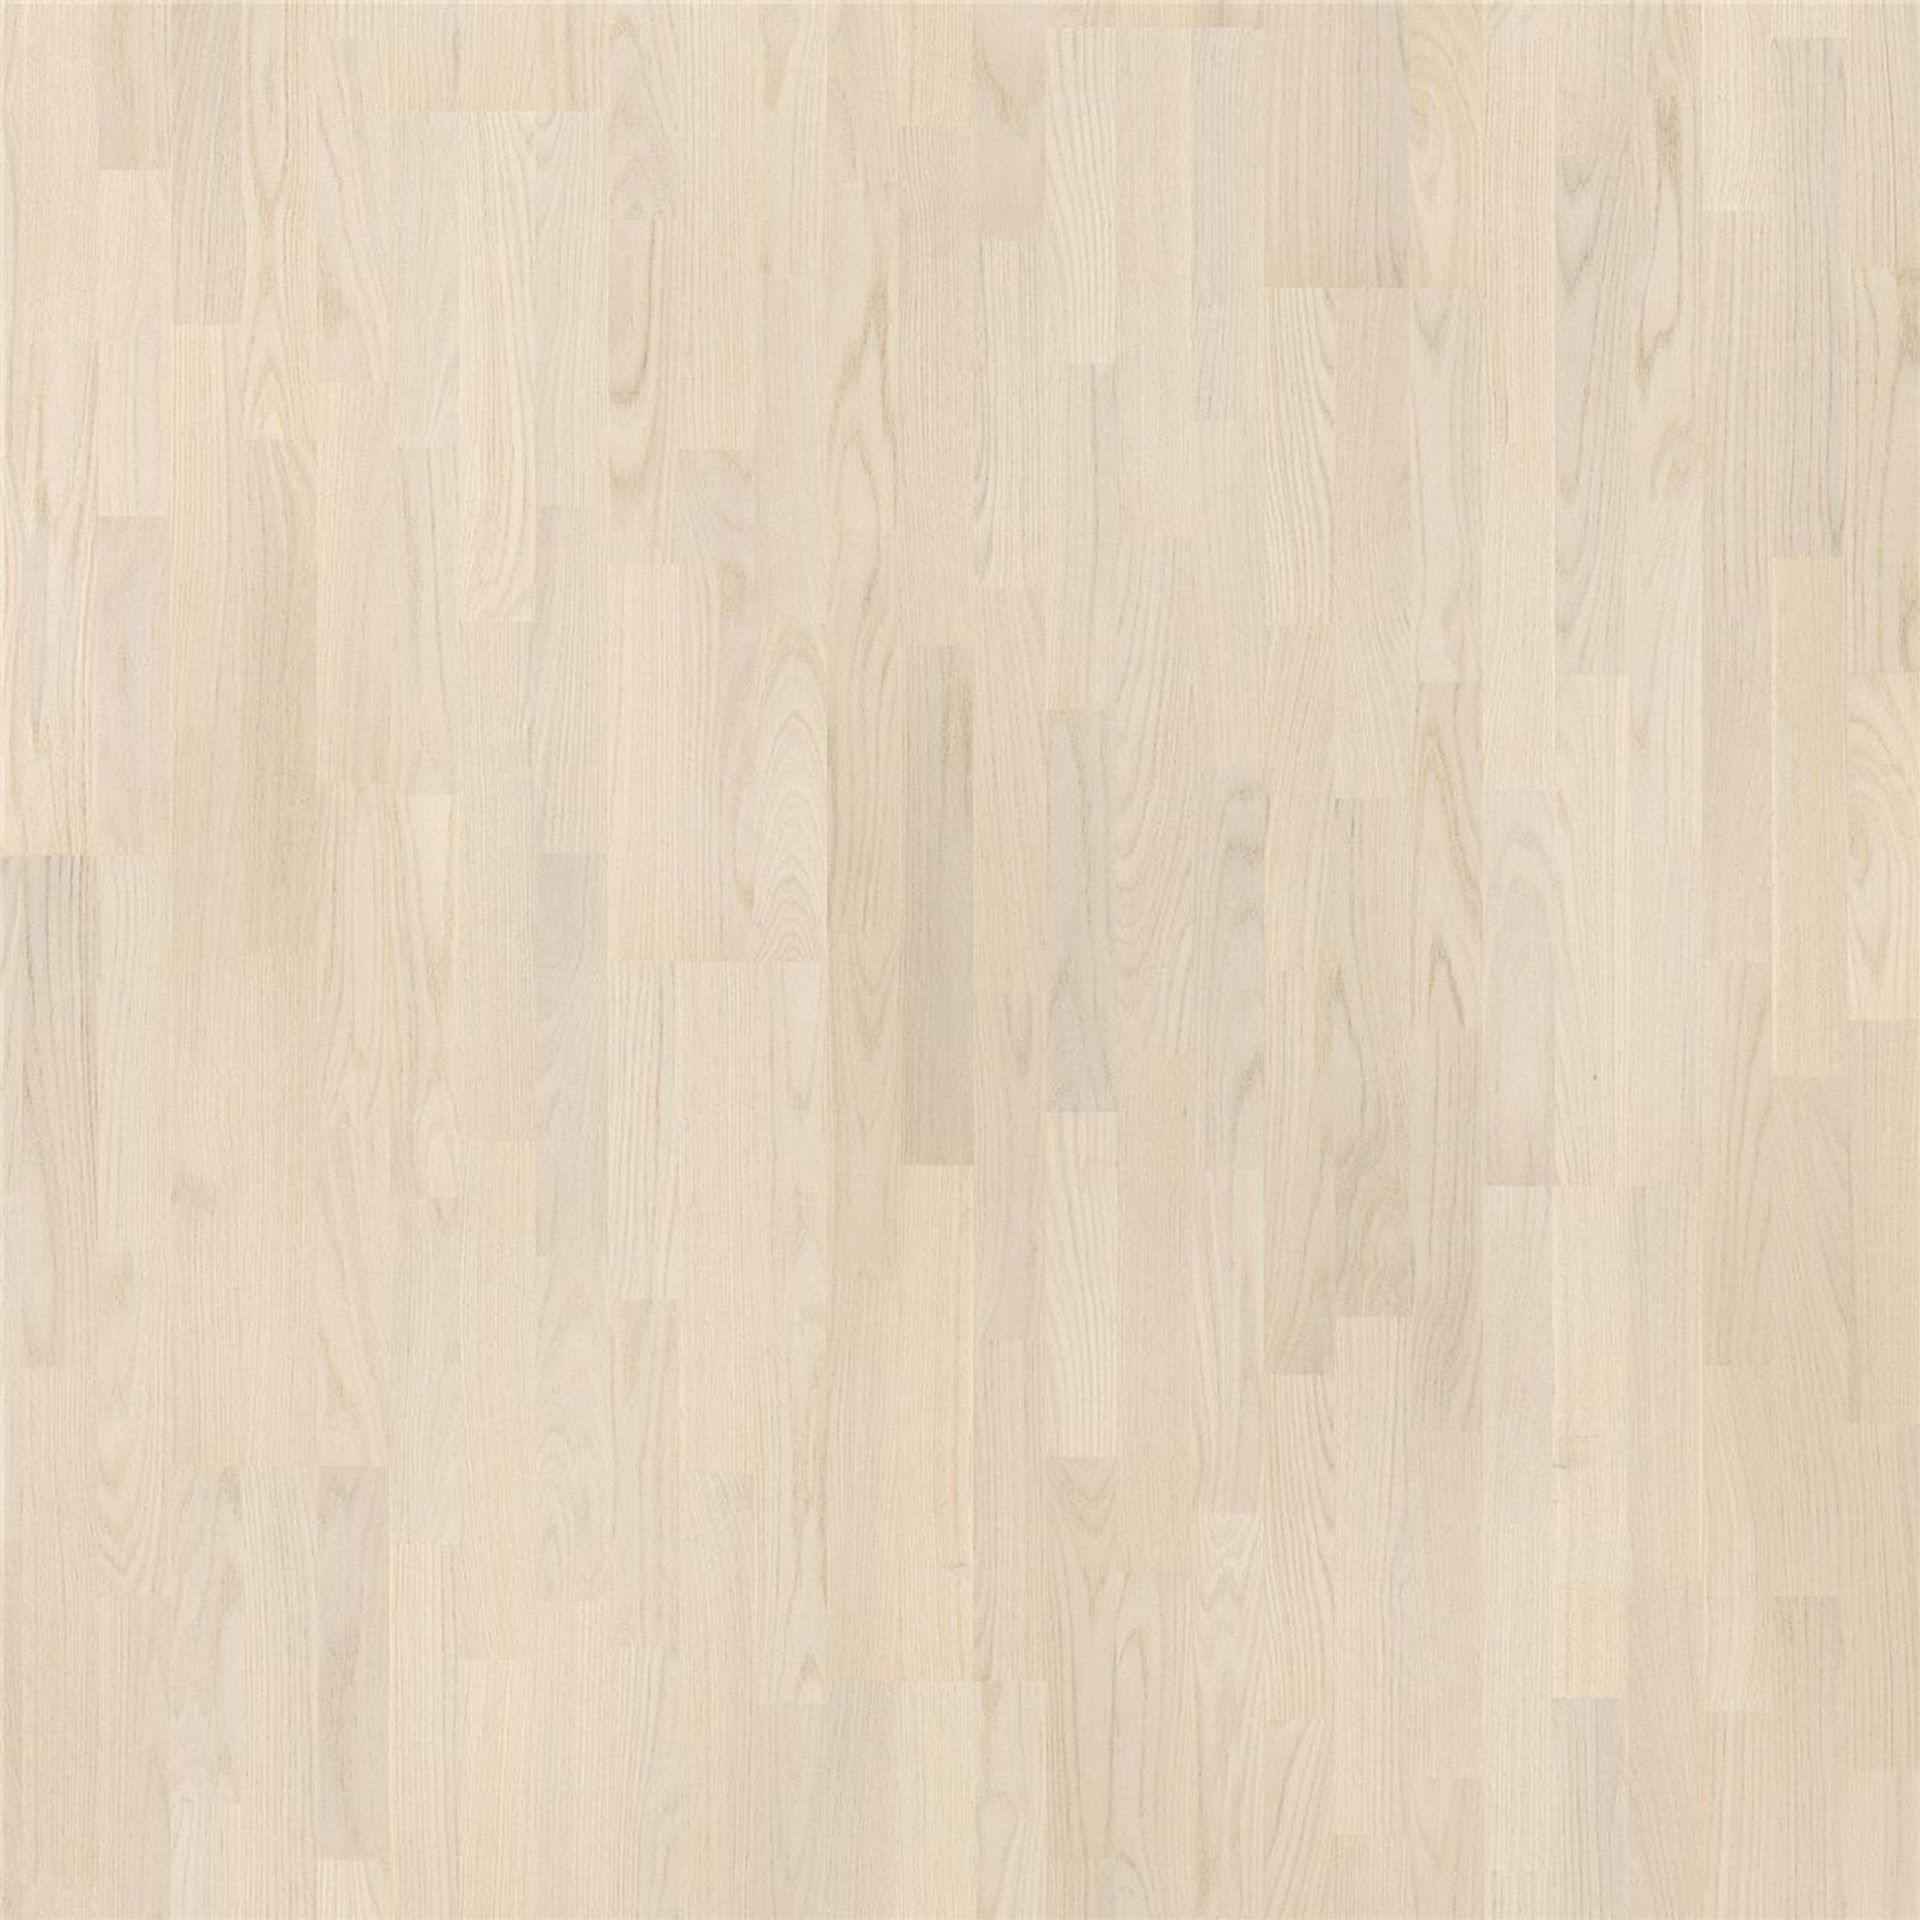 Holzboden Eiche NORTHERN WHITE 3 Stab MADRID-TB15 Planke 194 x 2281 mm